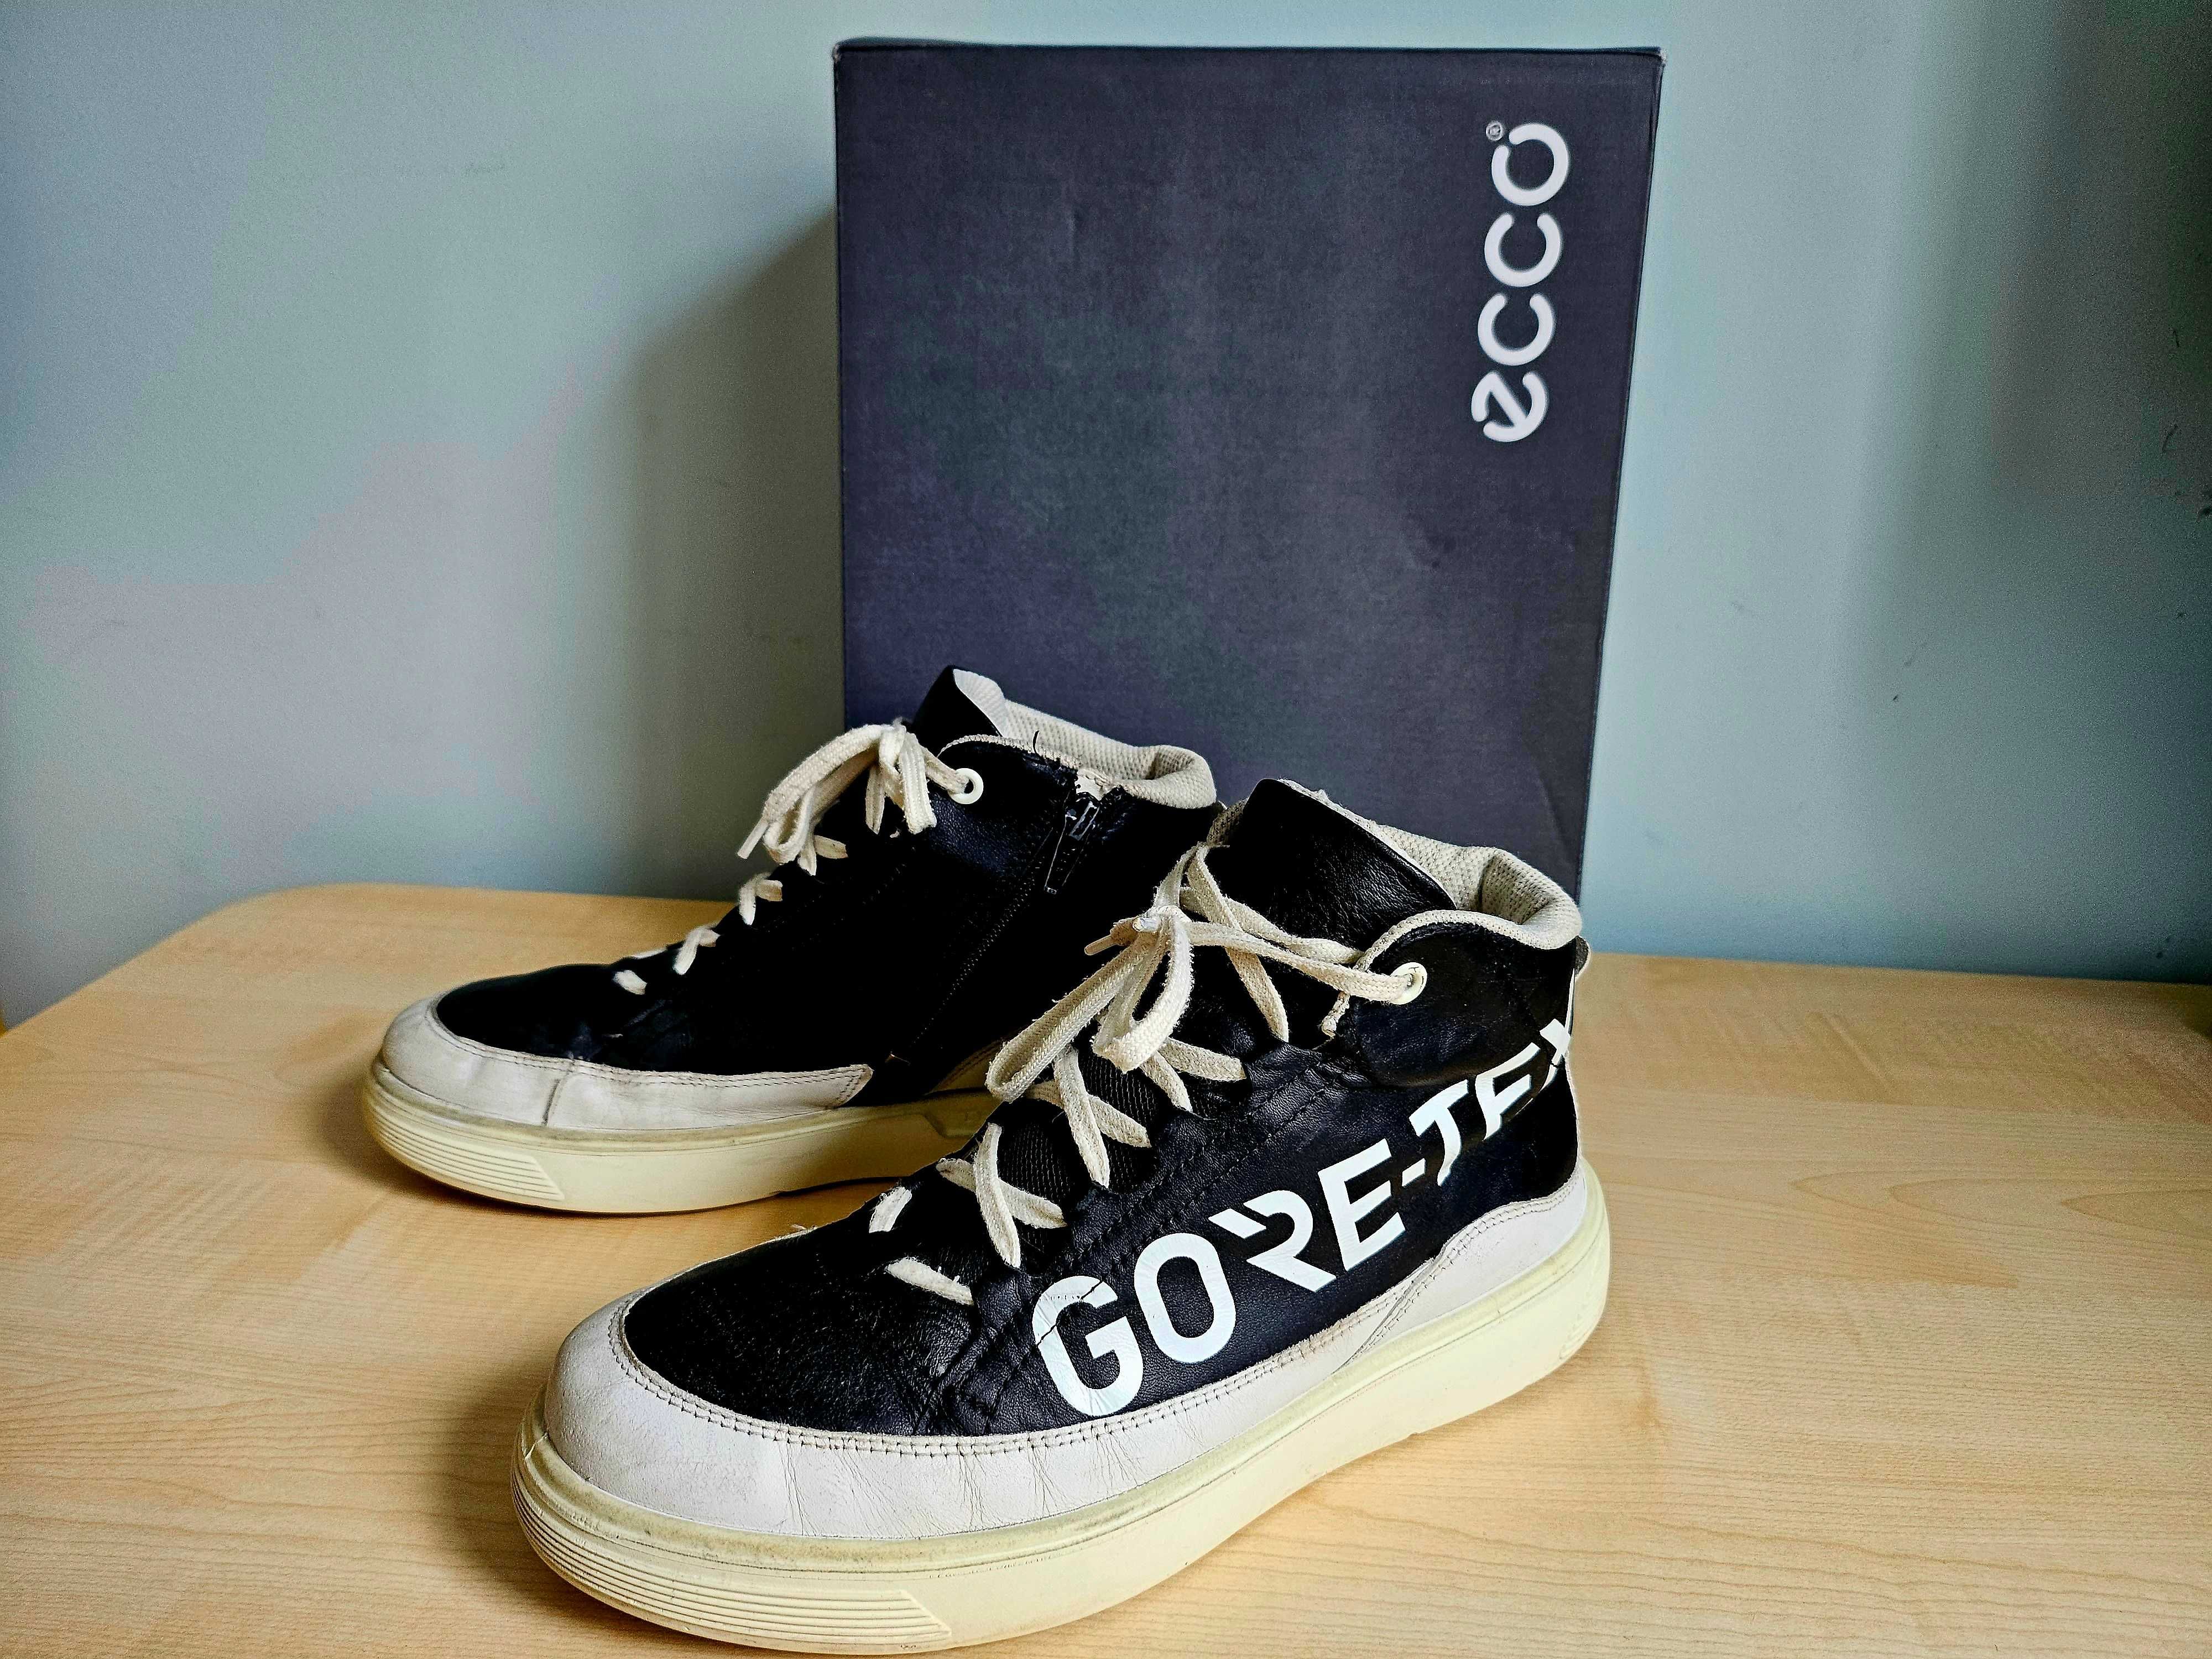 ECCO
Sneakersy Street Tray K GORE-TEX, 38, wkładka 24cm